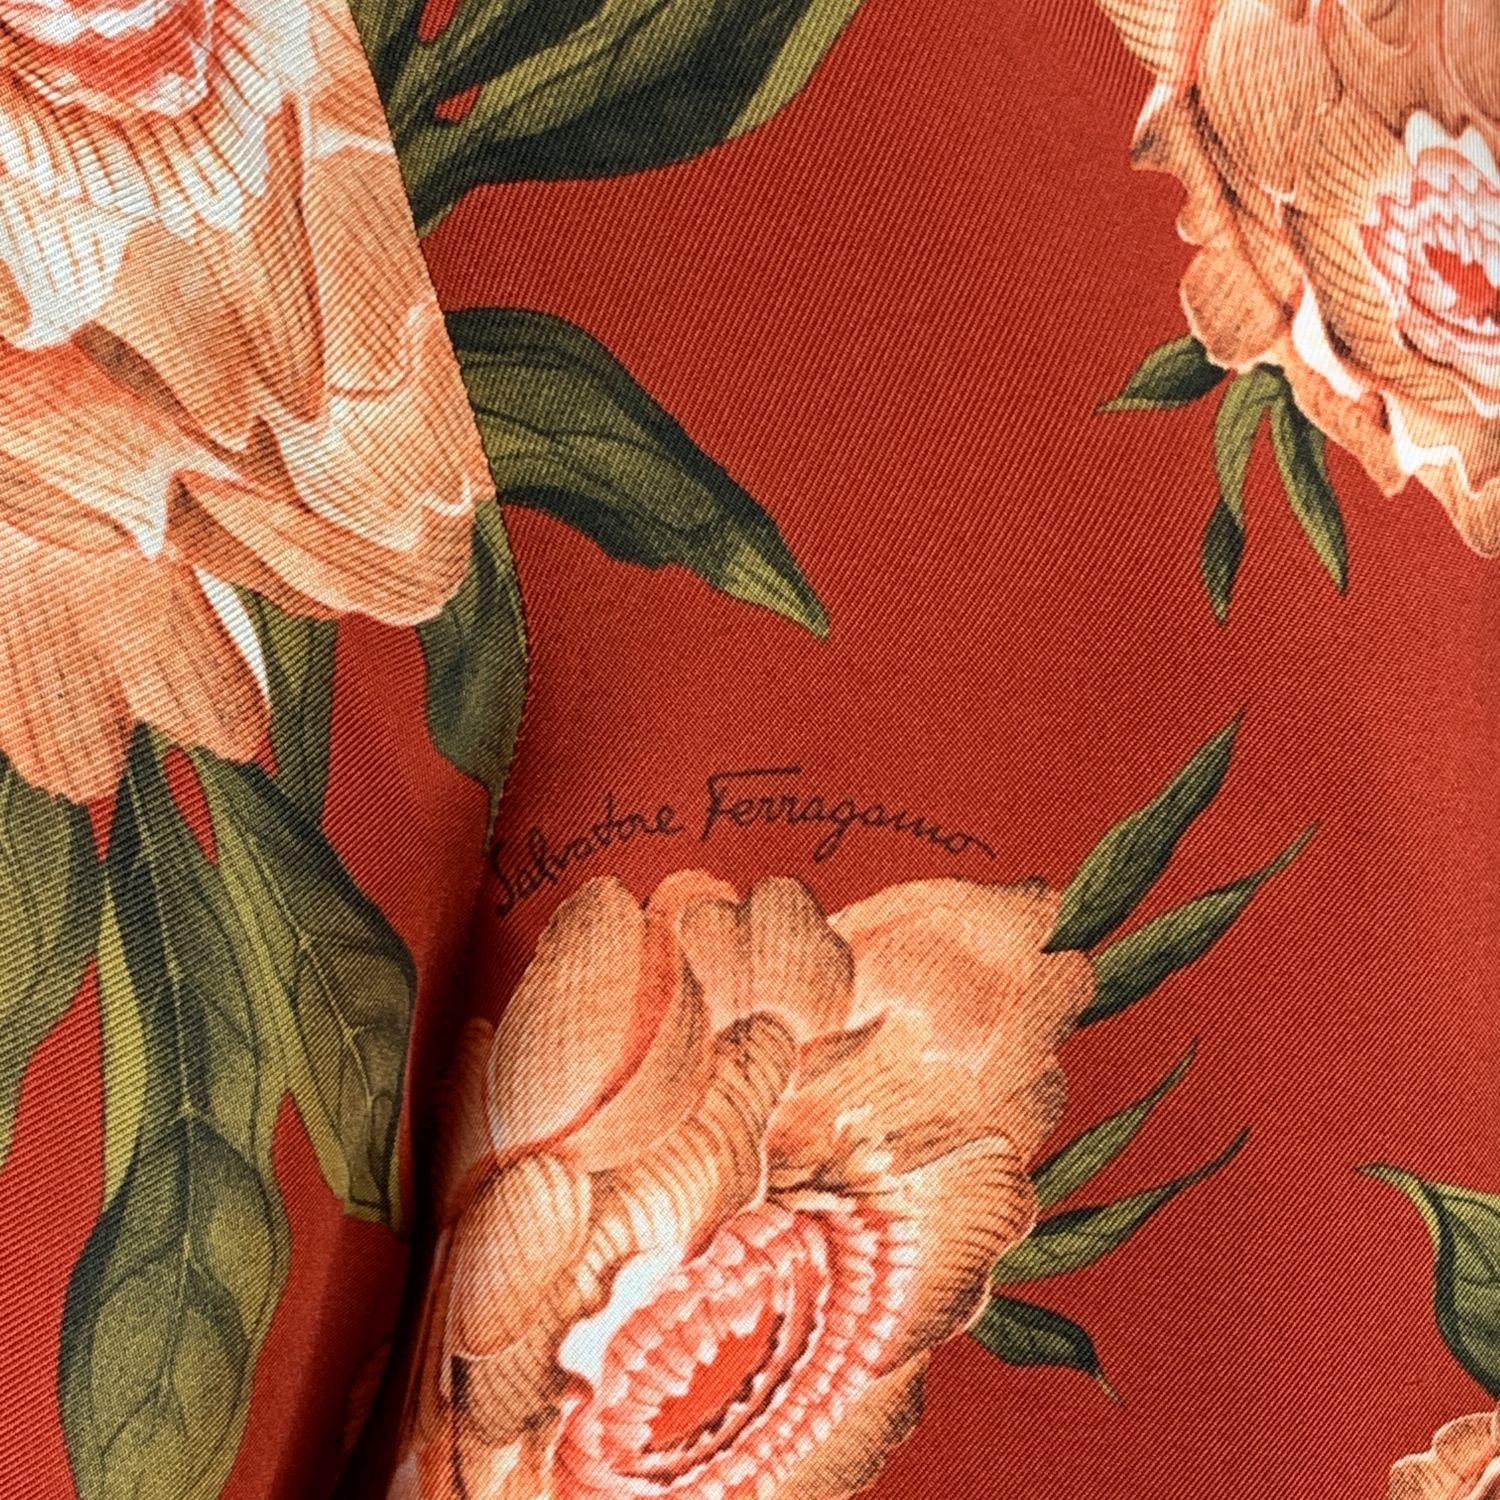 Women's Salvatore Ferragamo Floral Silk and Cotton T-Shirt Dress Size 40 IT